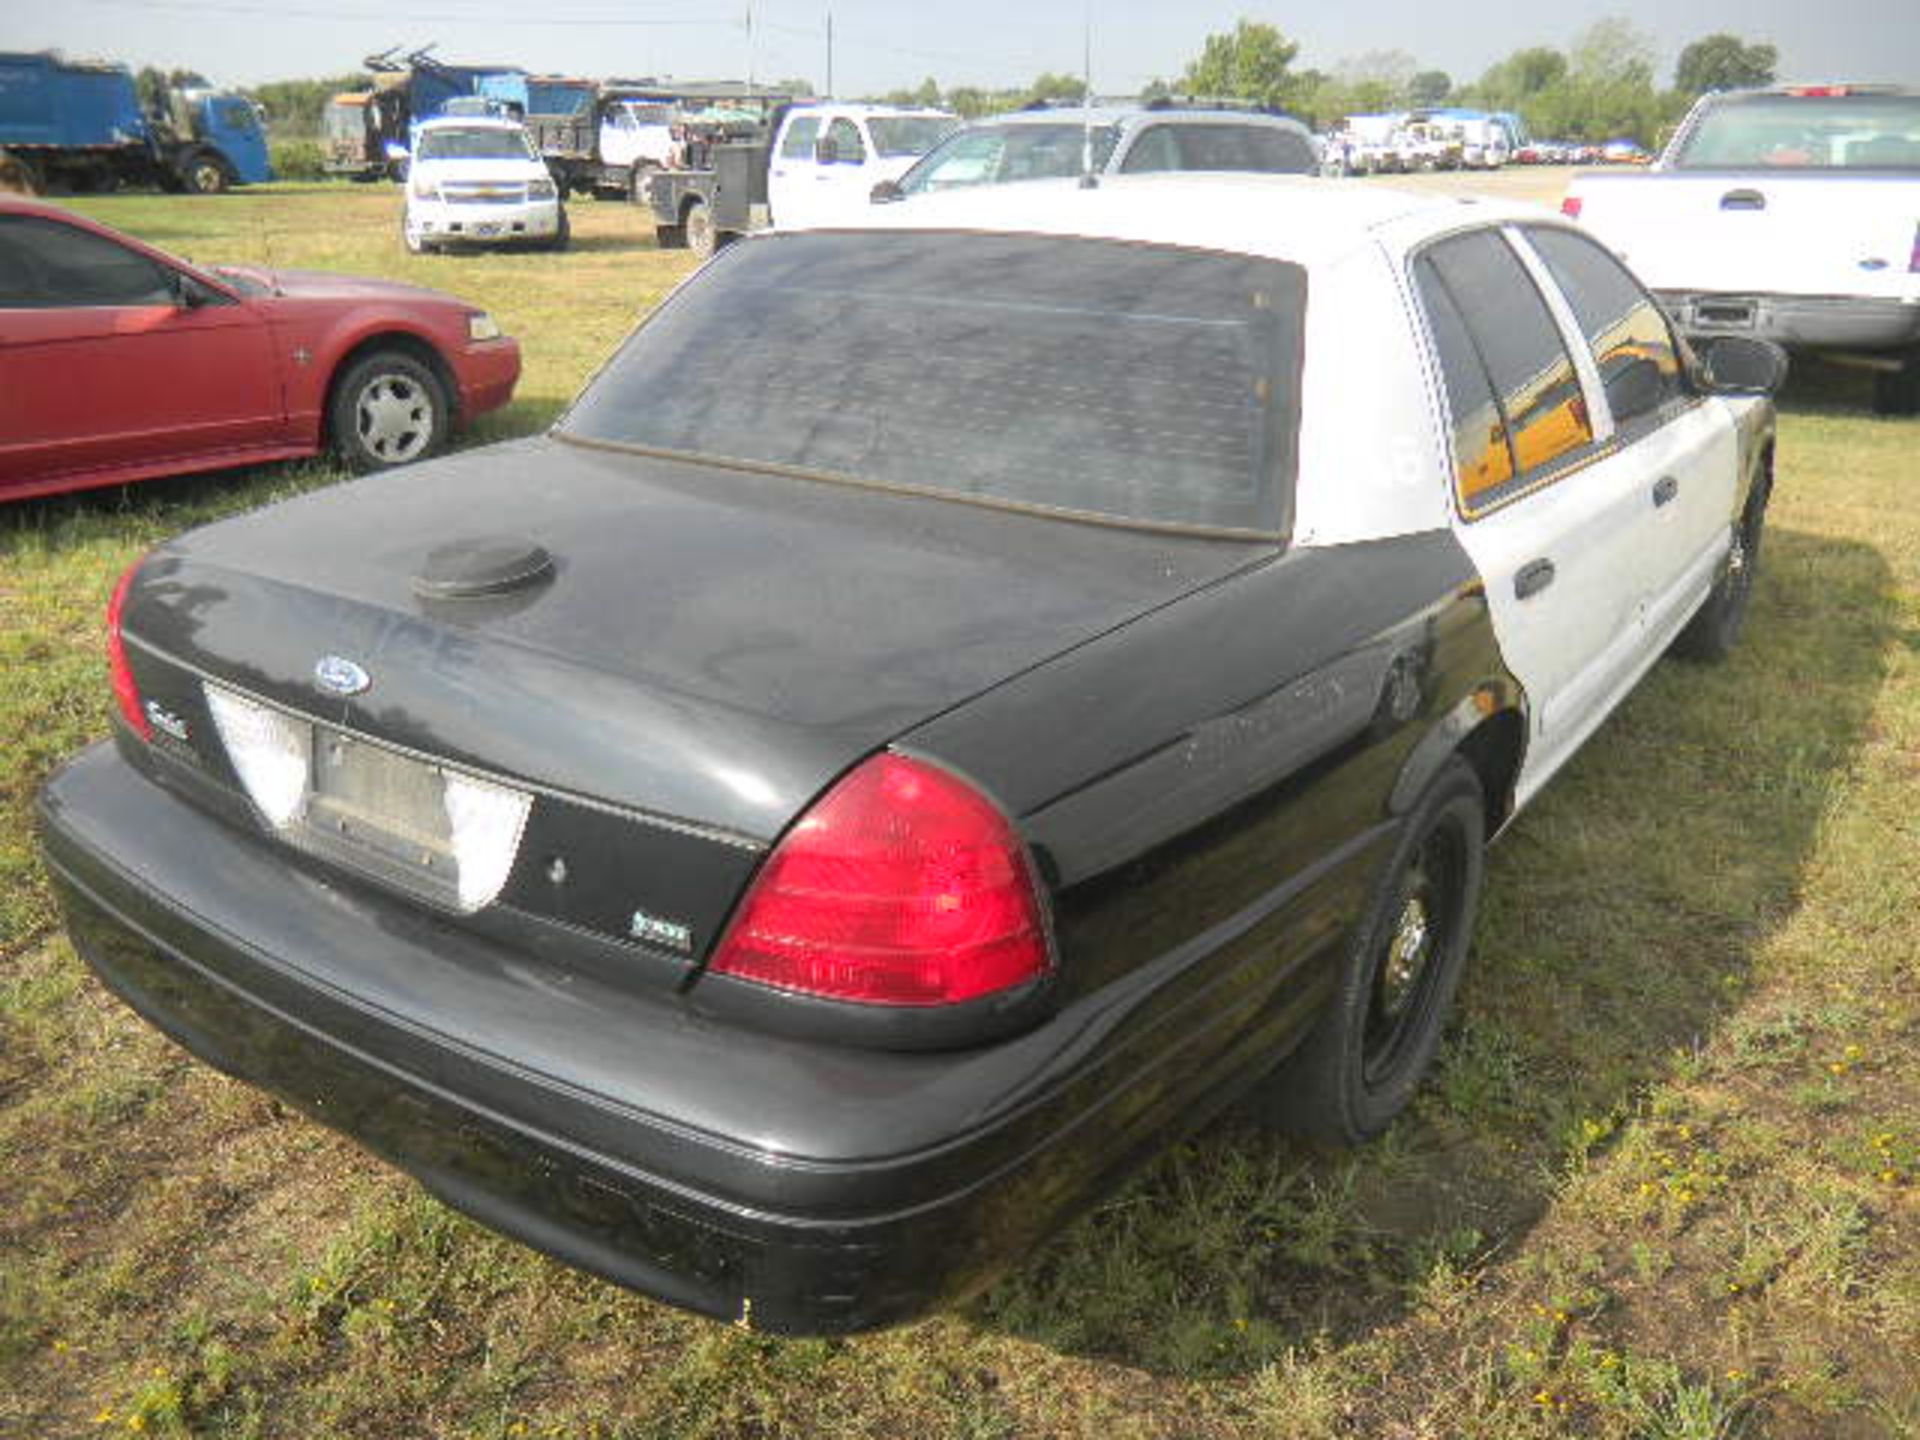 2010 Ford Crown Vic B/W Patrol Car - Asset I.D. #610 - Last of Vin (X108696) - Image 4 of 8